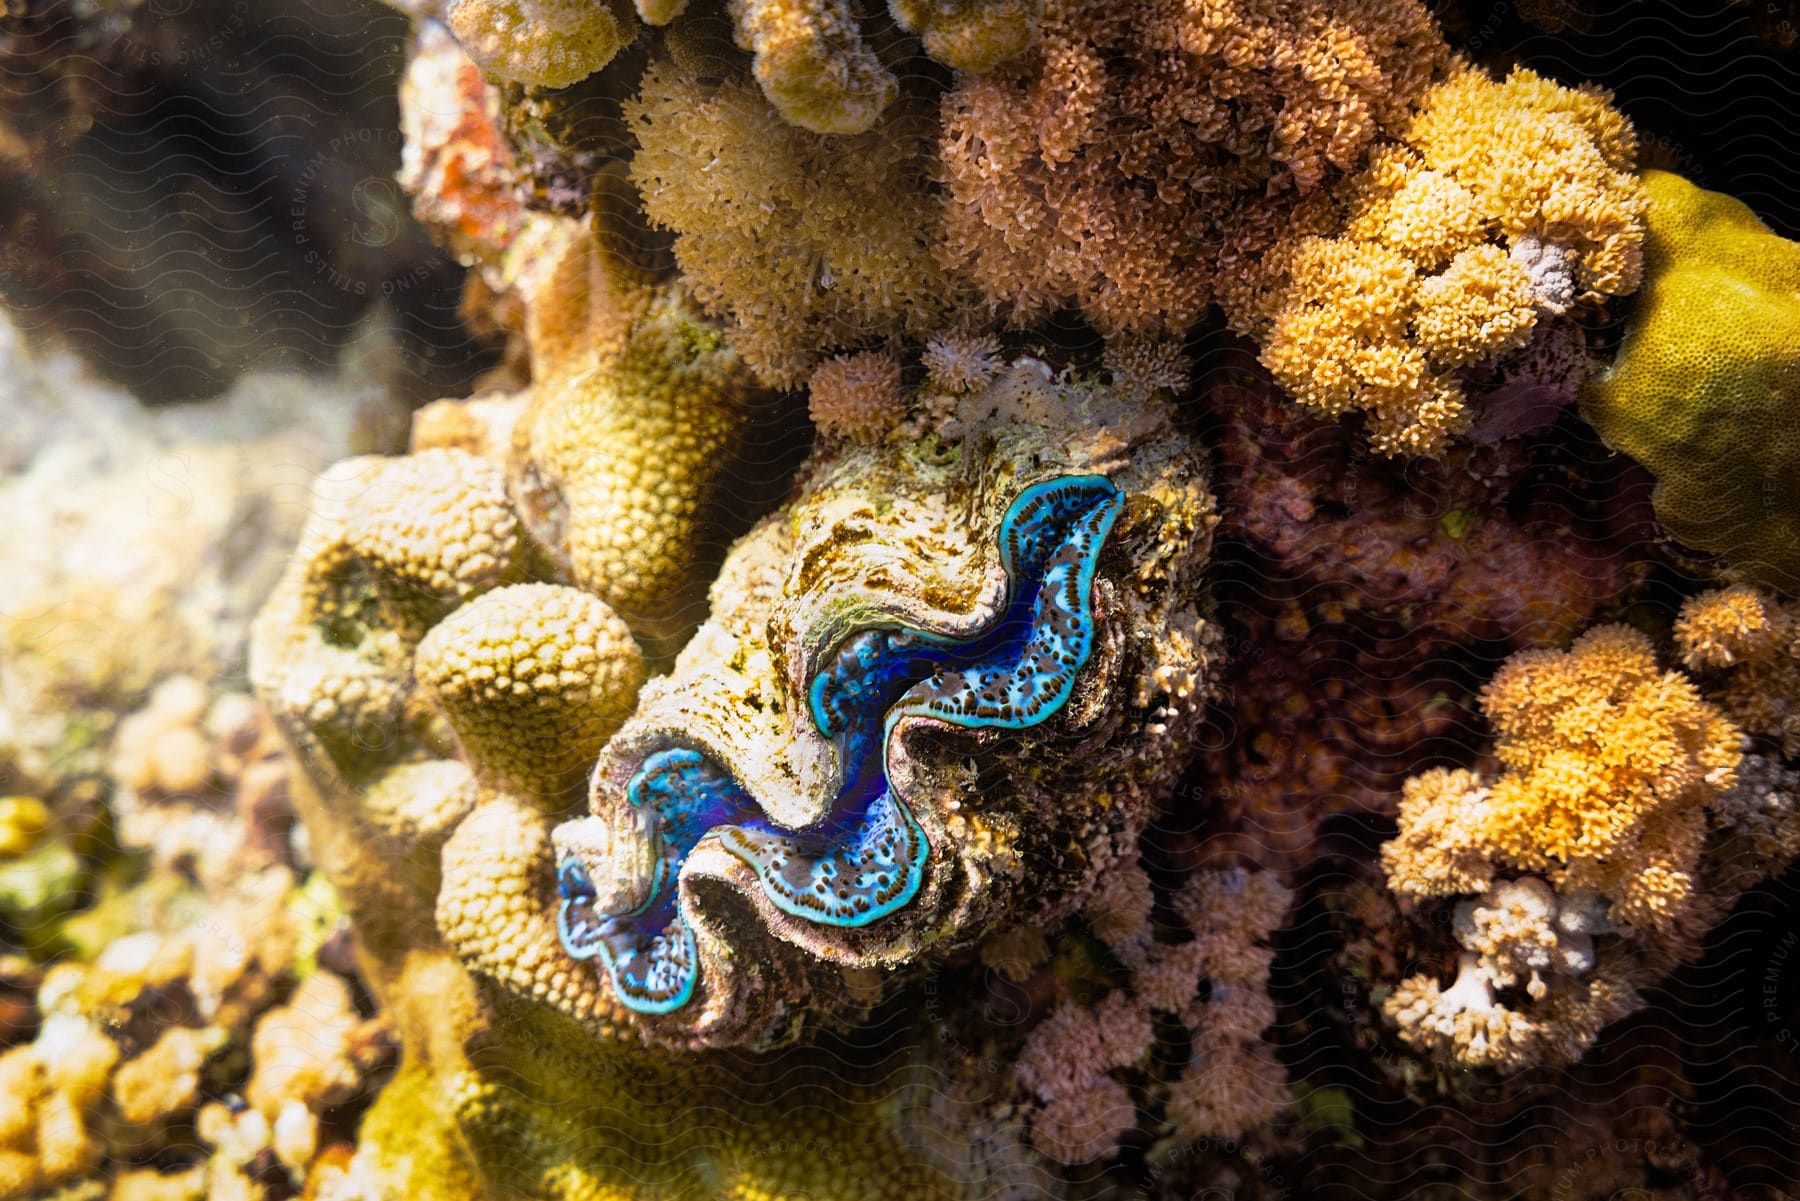 Coral reef colony underwater in a high key lighting showcasing marine invertebrates